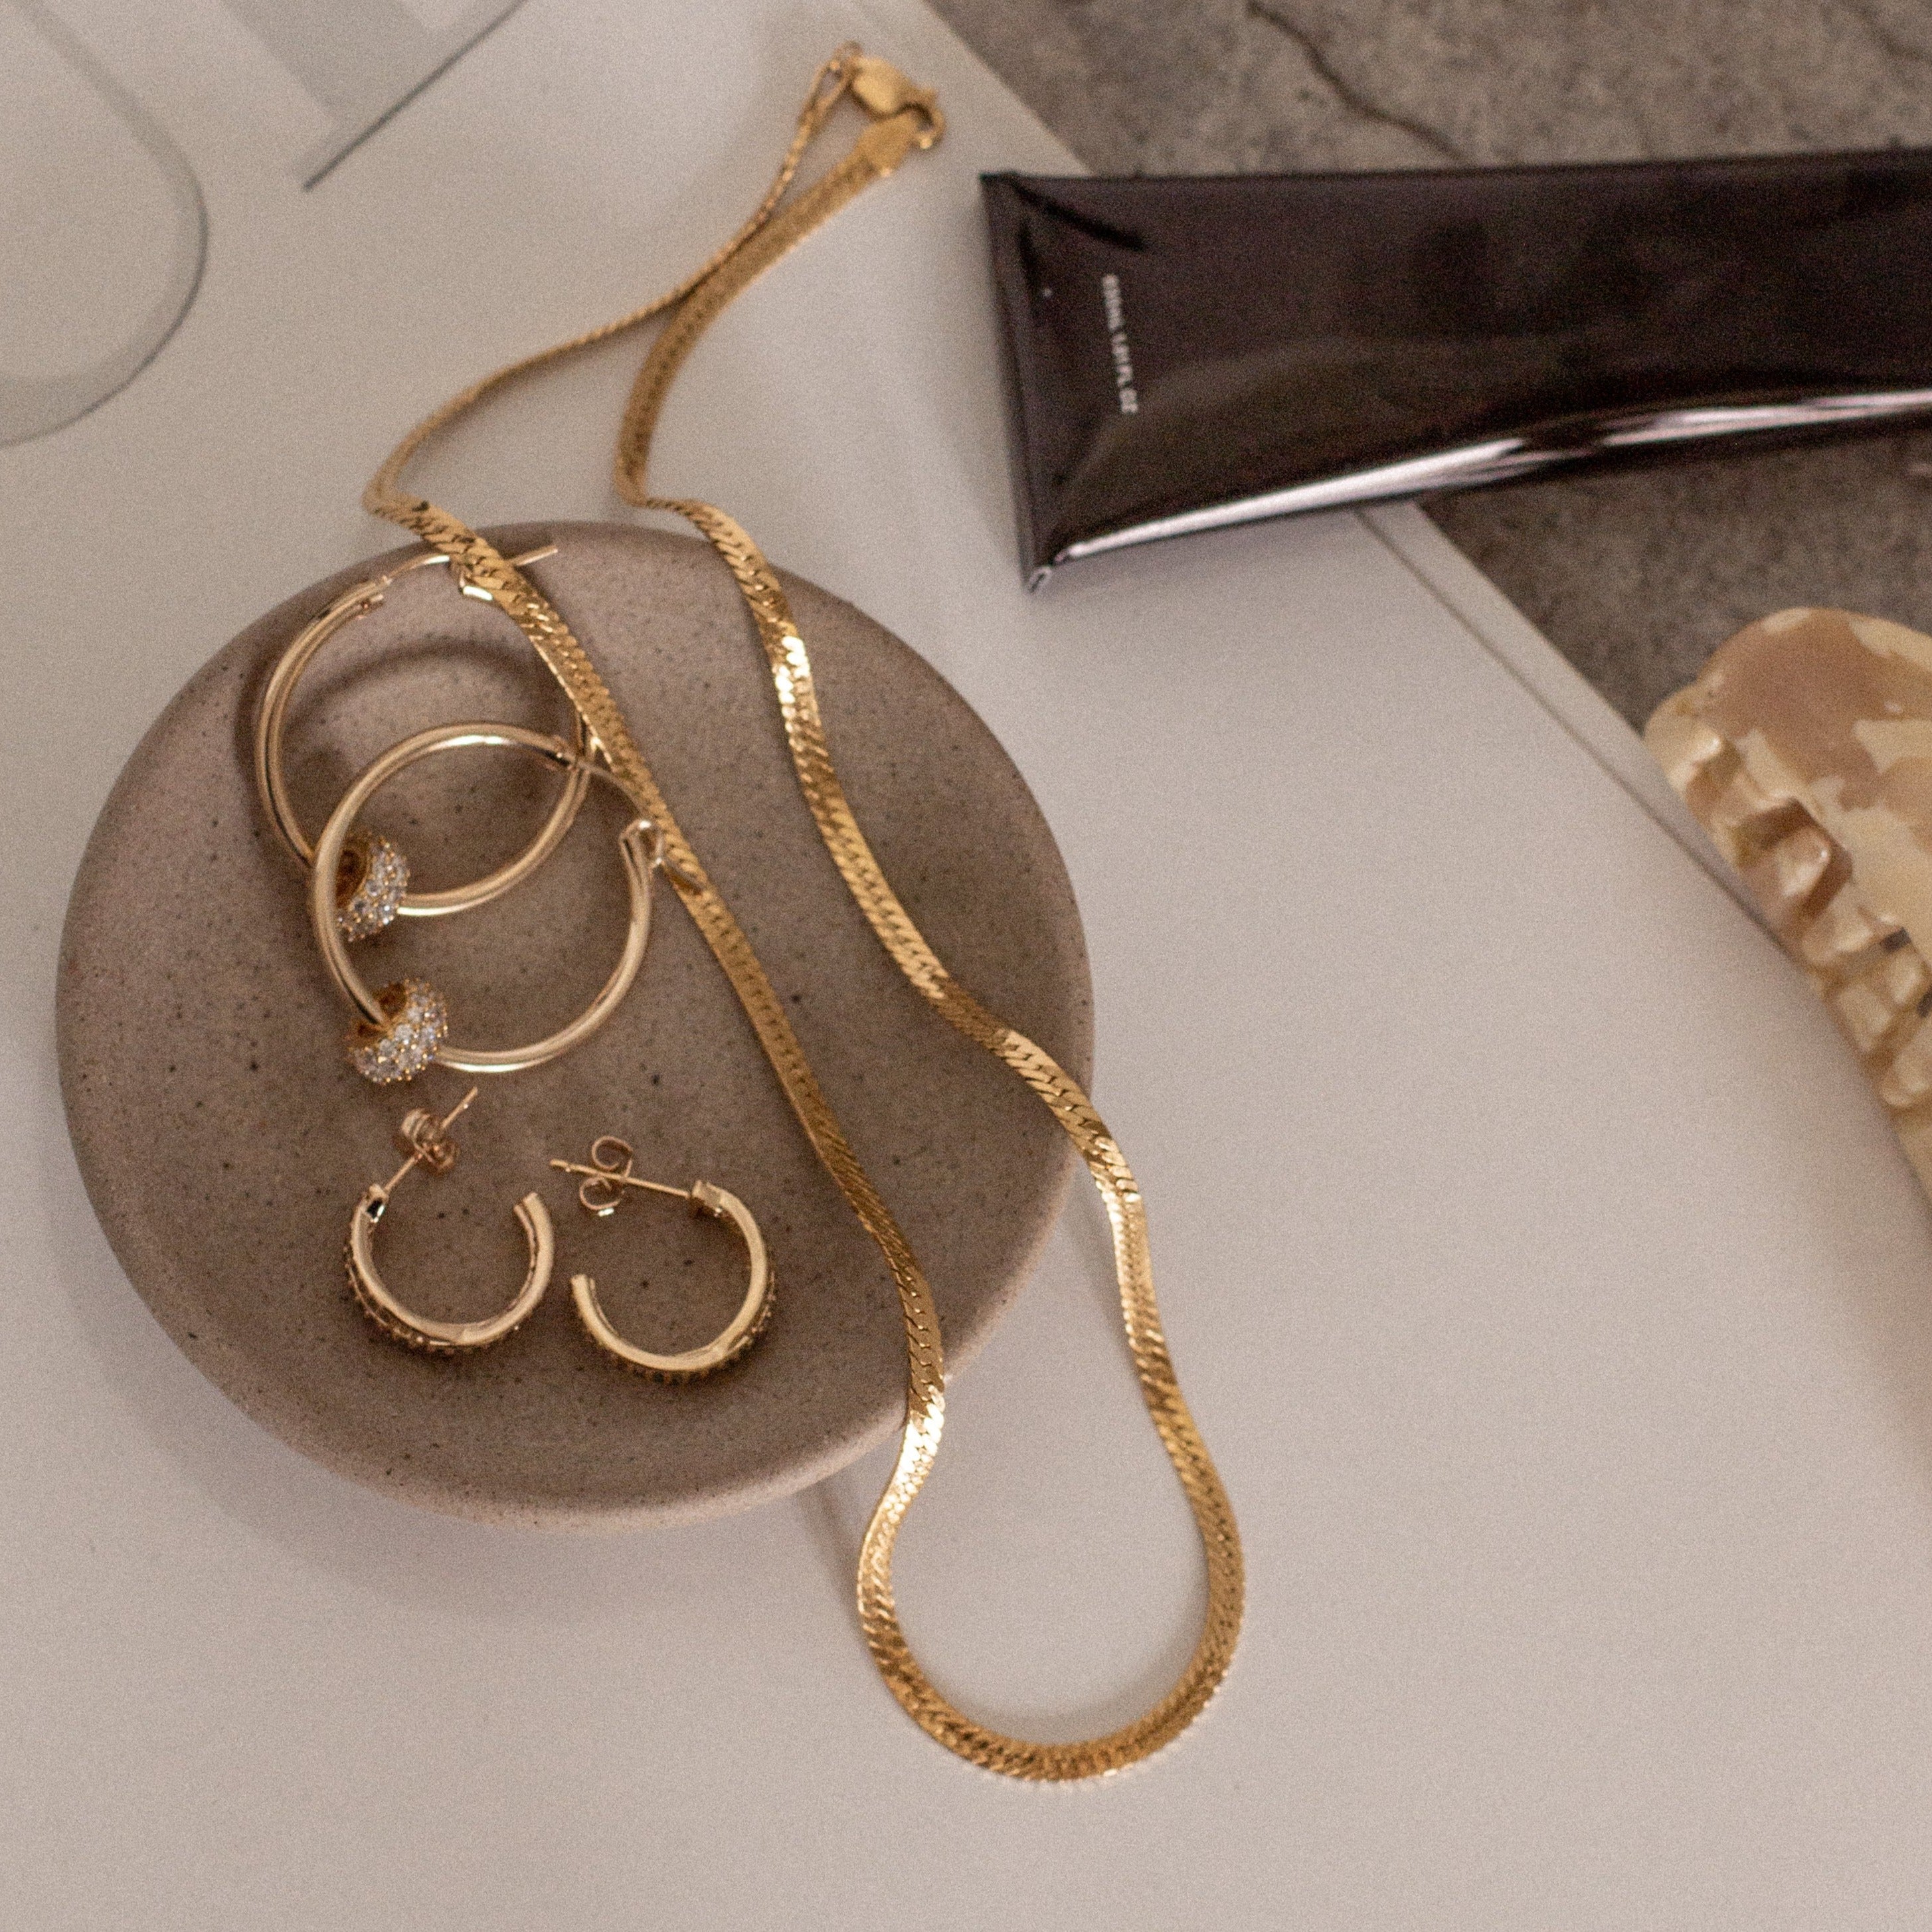 Gold filled herringbone necklace with hoop earrings